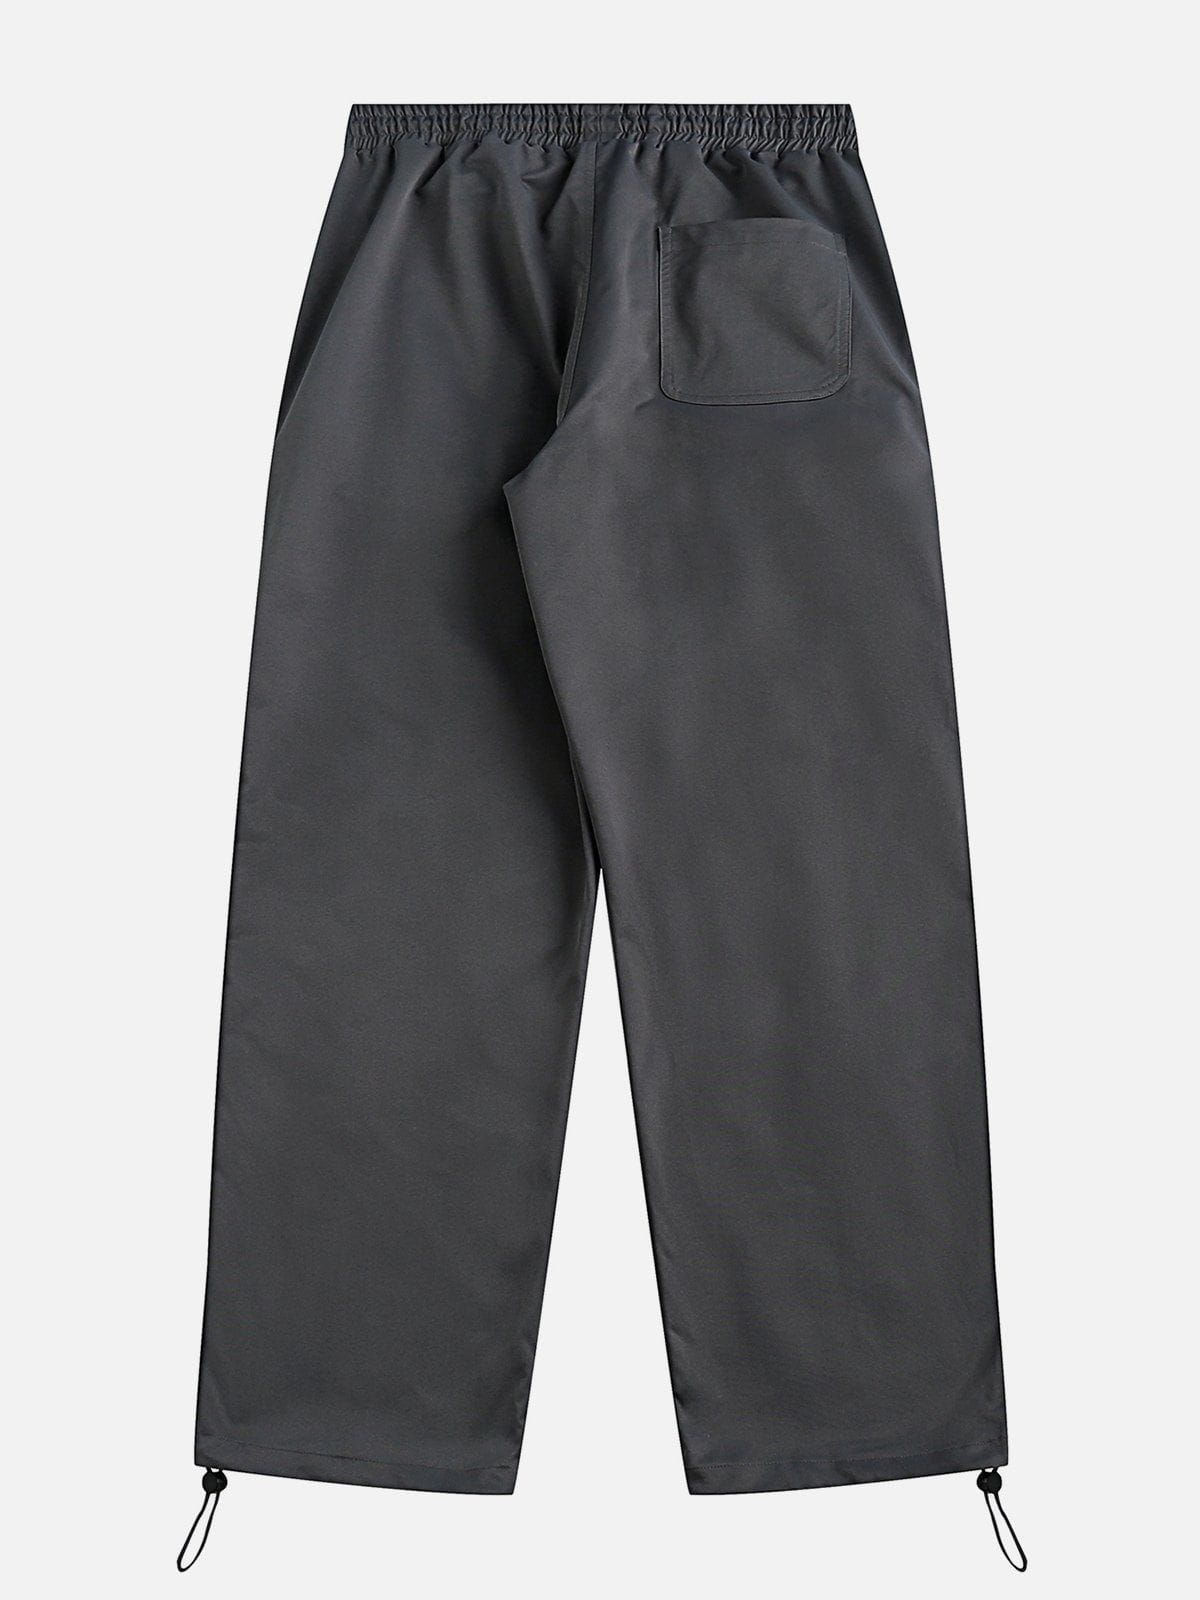 Sneakerland® - Mesh Pocket Cargo Pants